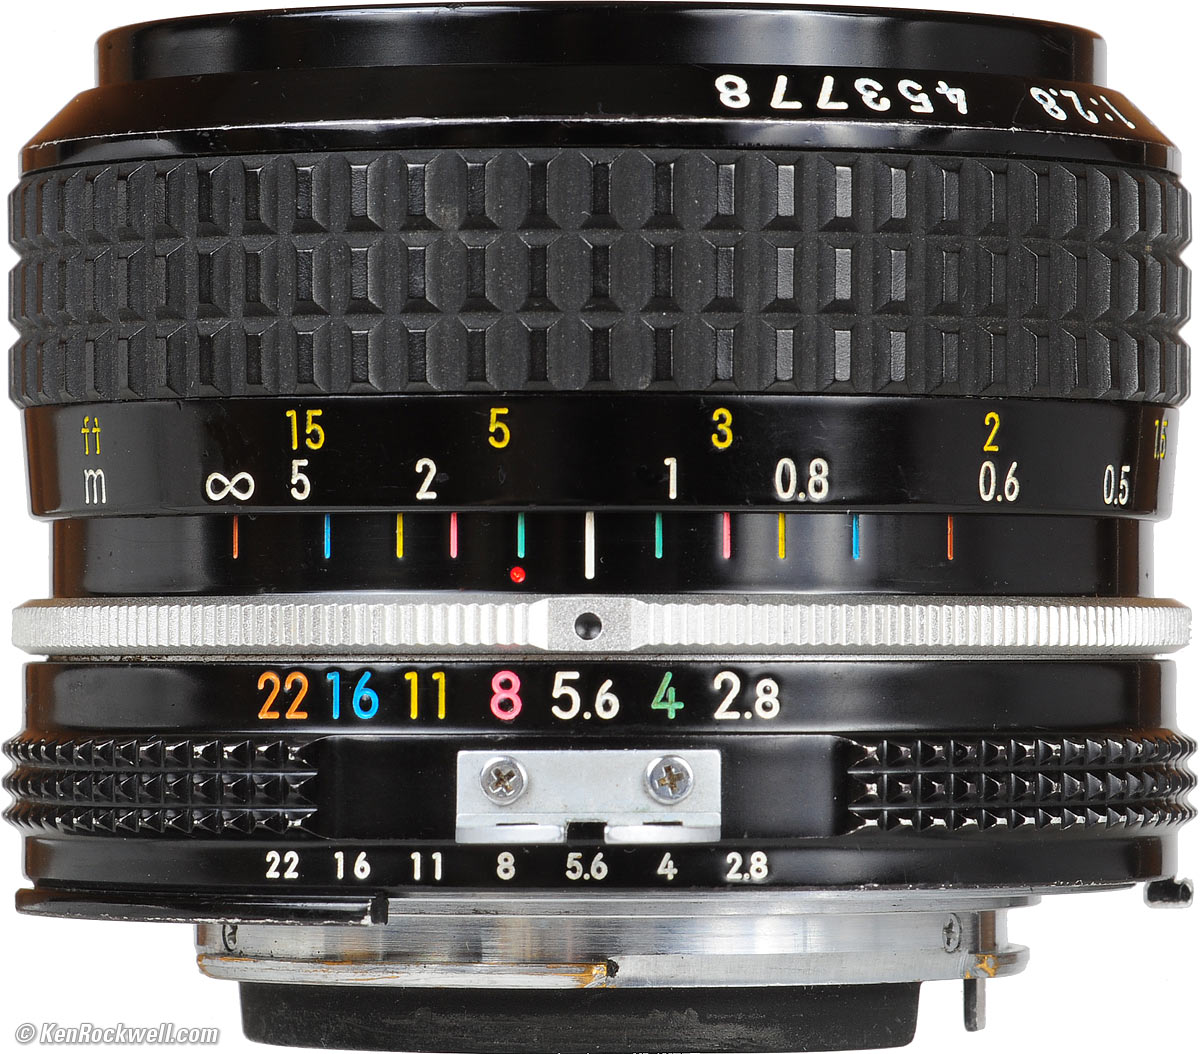 nikon 28mm f2 8 ais lens review, Amazon.com Nikon 28mm f/2.8 series E lens  Camera Lenses : Electronics - hadleysocimi.com